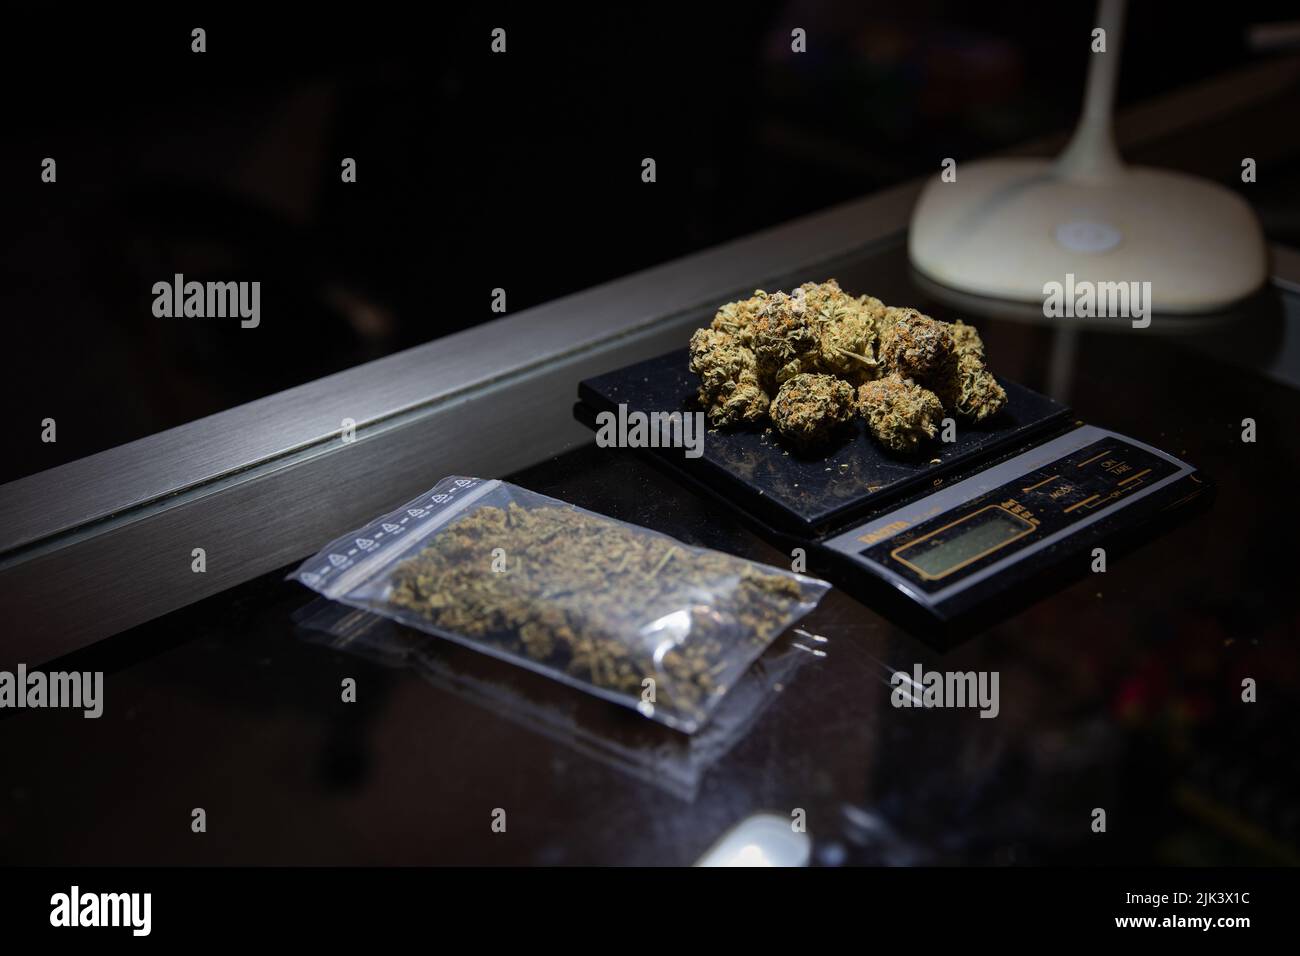 https://c8.alamy.com/comp/2JK3X1C/rraw-marijuana-weighed-on-a-scale-next-to-a-bag-of-marijuana-ready-to-be-sold-2JK3X1C.jpg